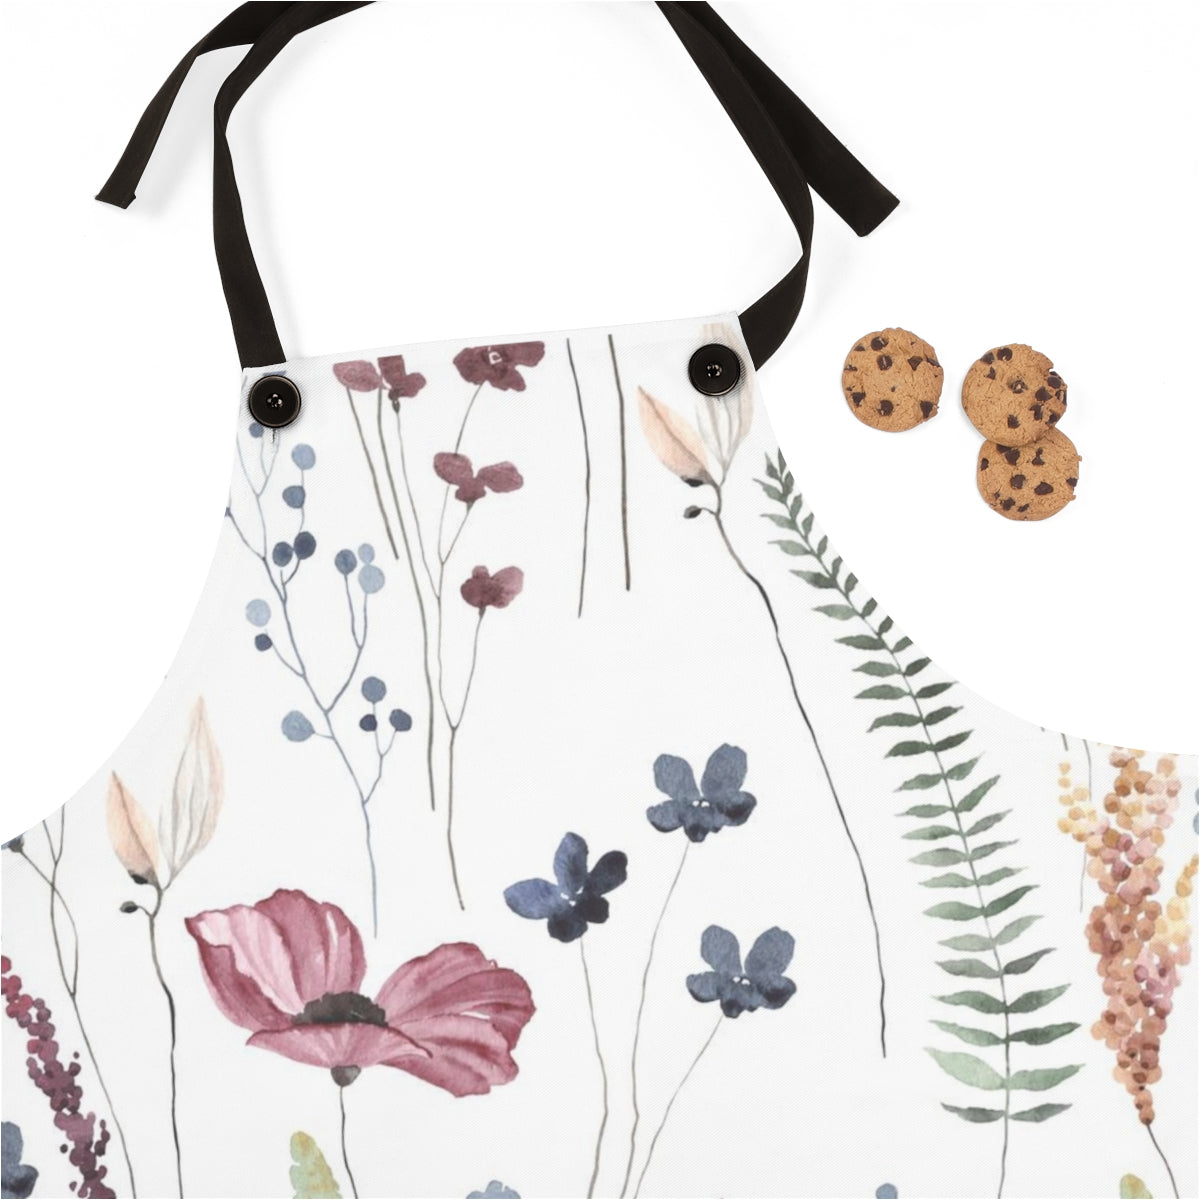 Floral print apron - My Kitchen Adorned